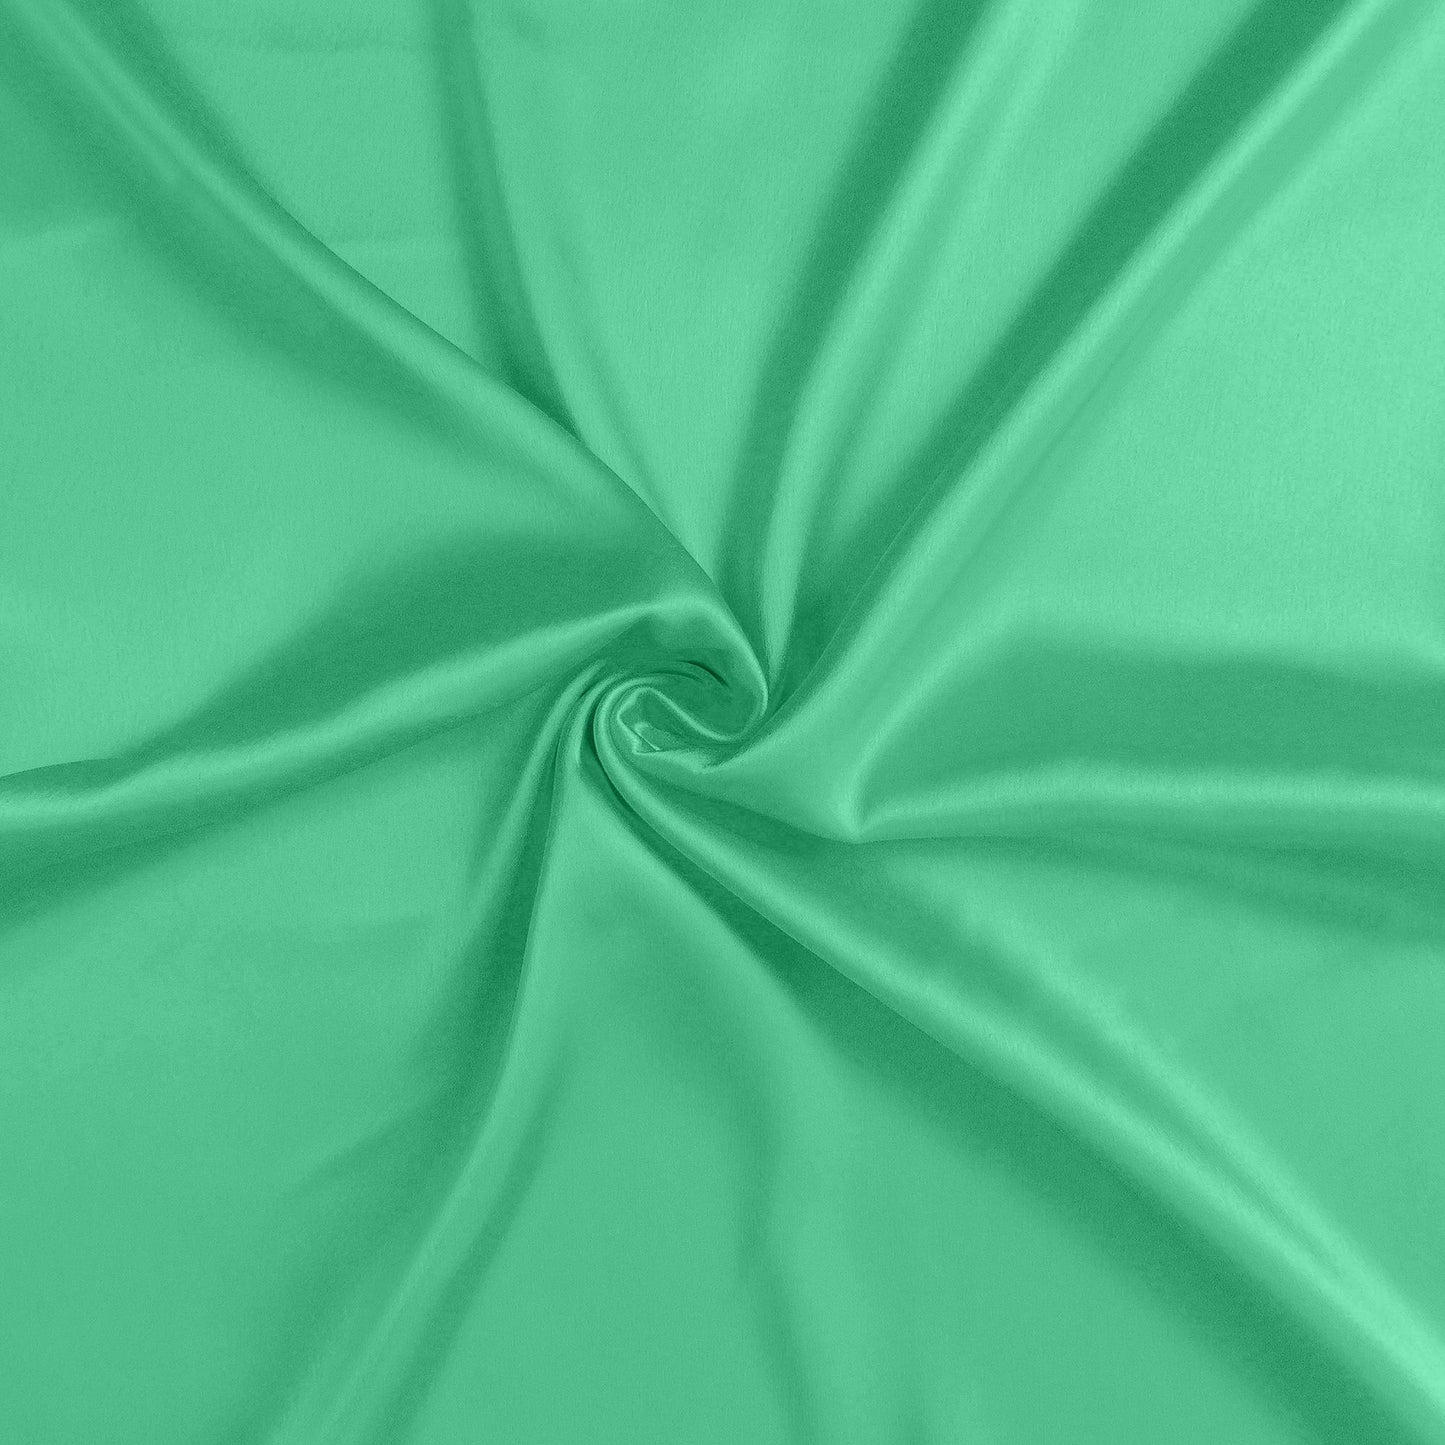 Luxury Soft Plain Satin Silk Pillowcases in Set of 2 - Green Lake